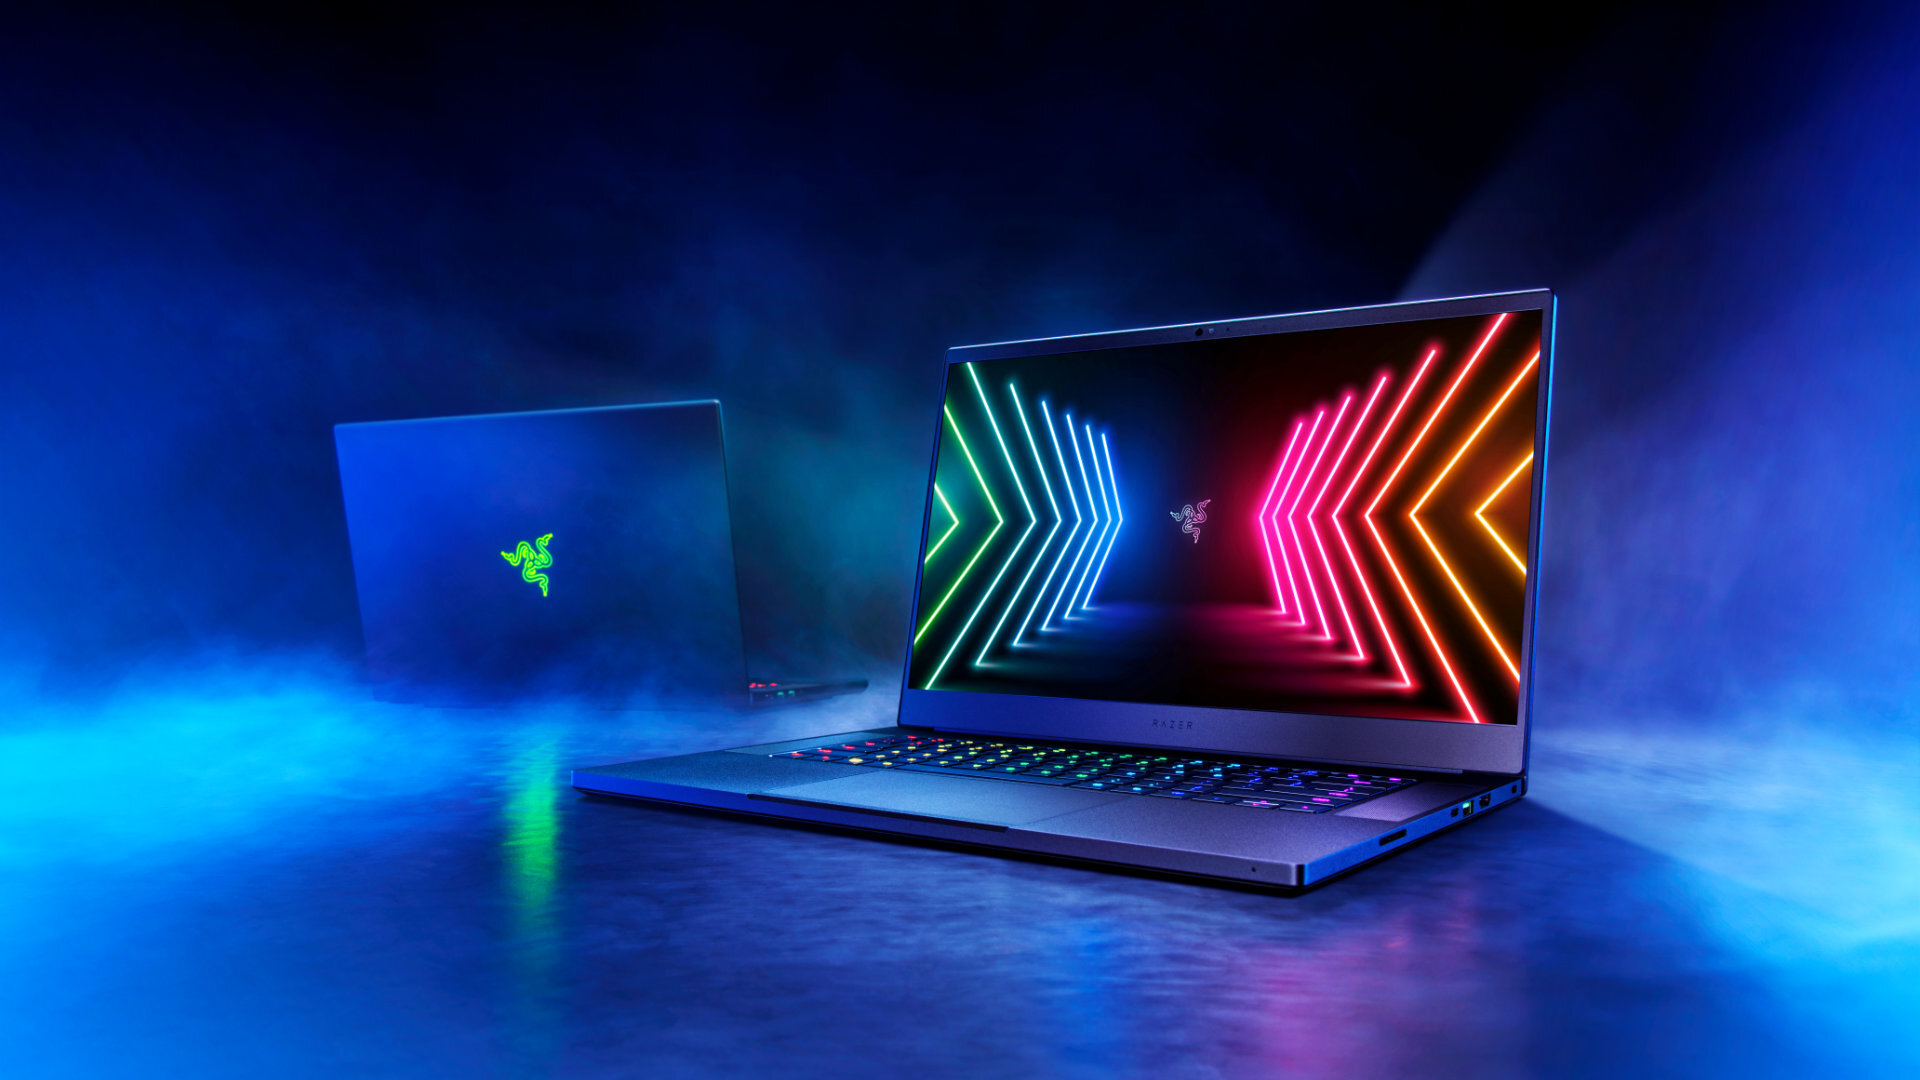 New Razer Blade gaming laptops pack Nvidiaâ€™s mobile RTX 30 series GPUs